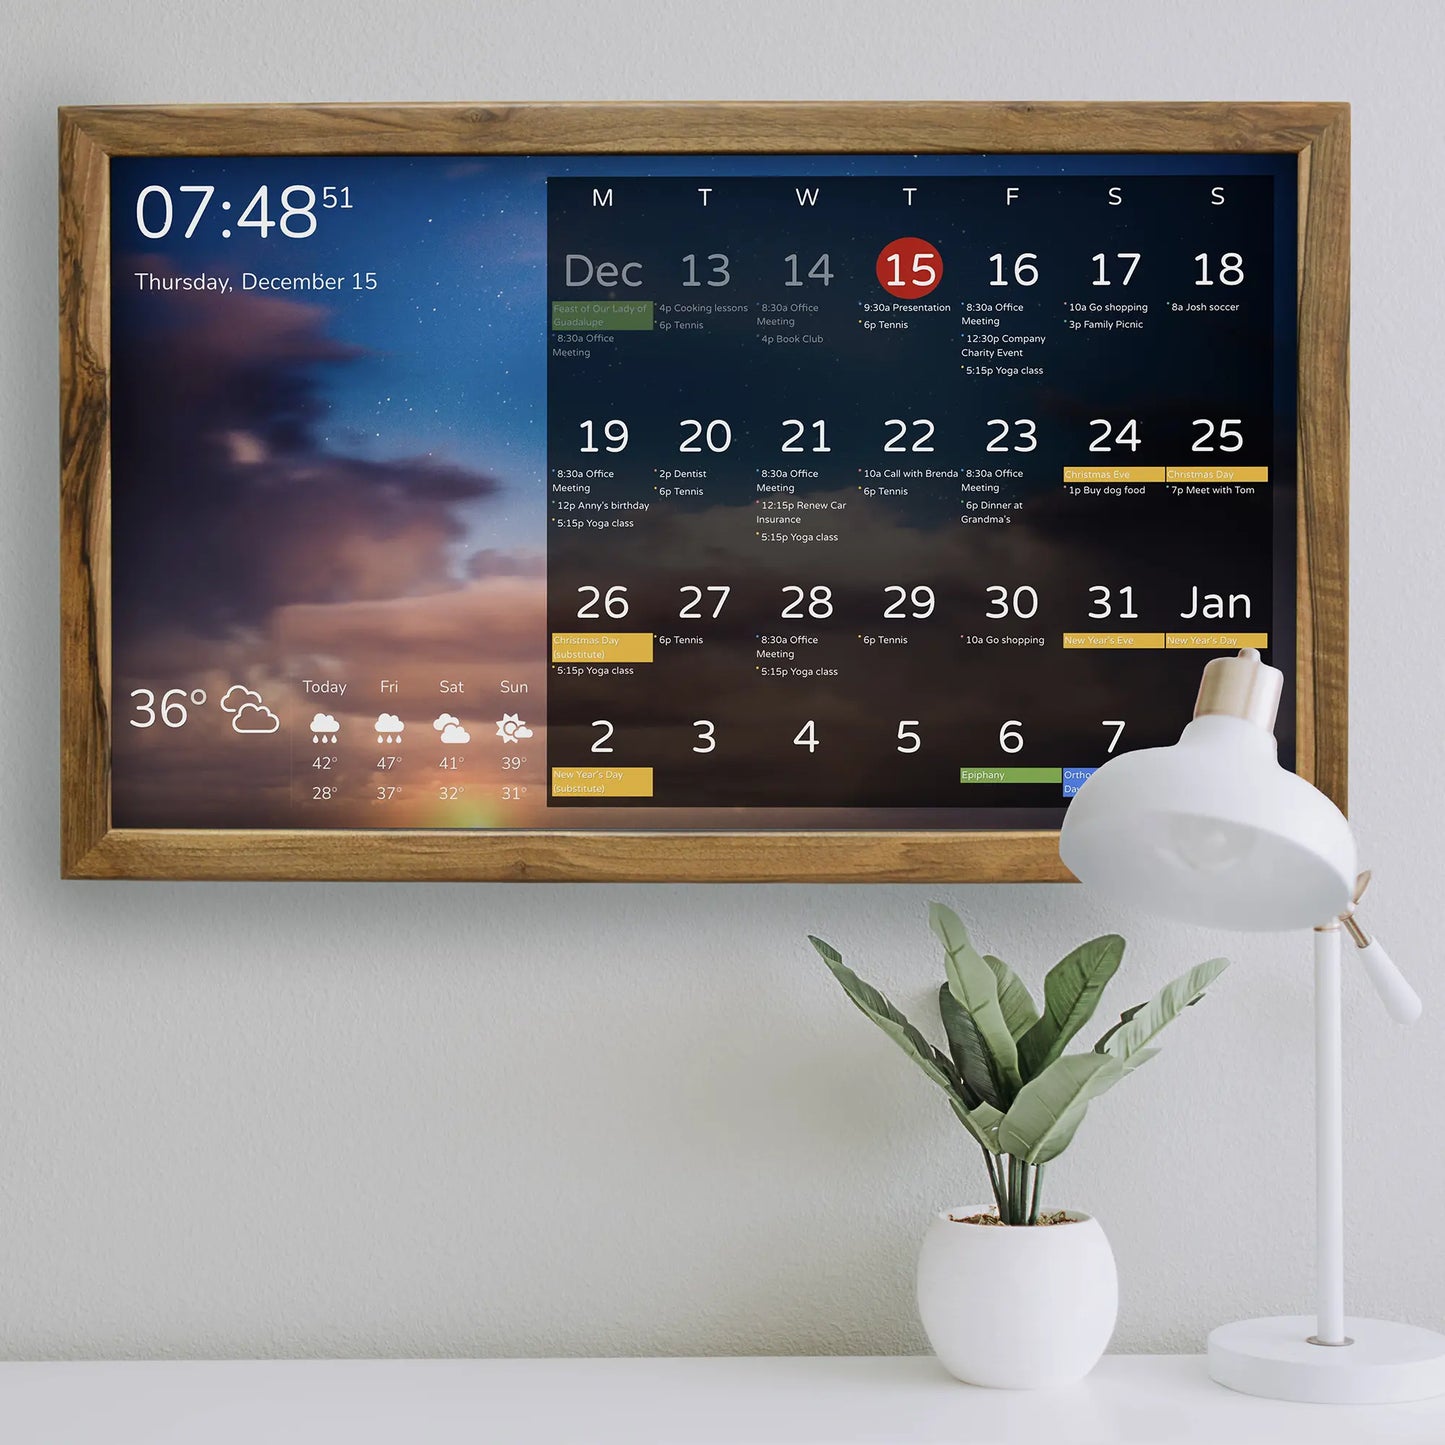 Smart Wall Calendar 32 Inch in Wooden Frame